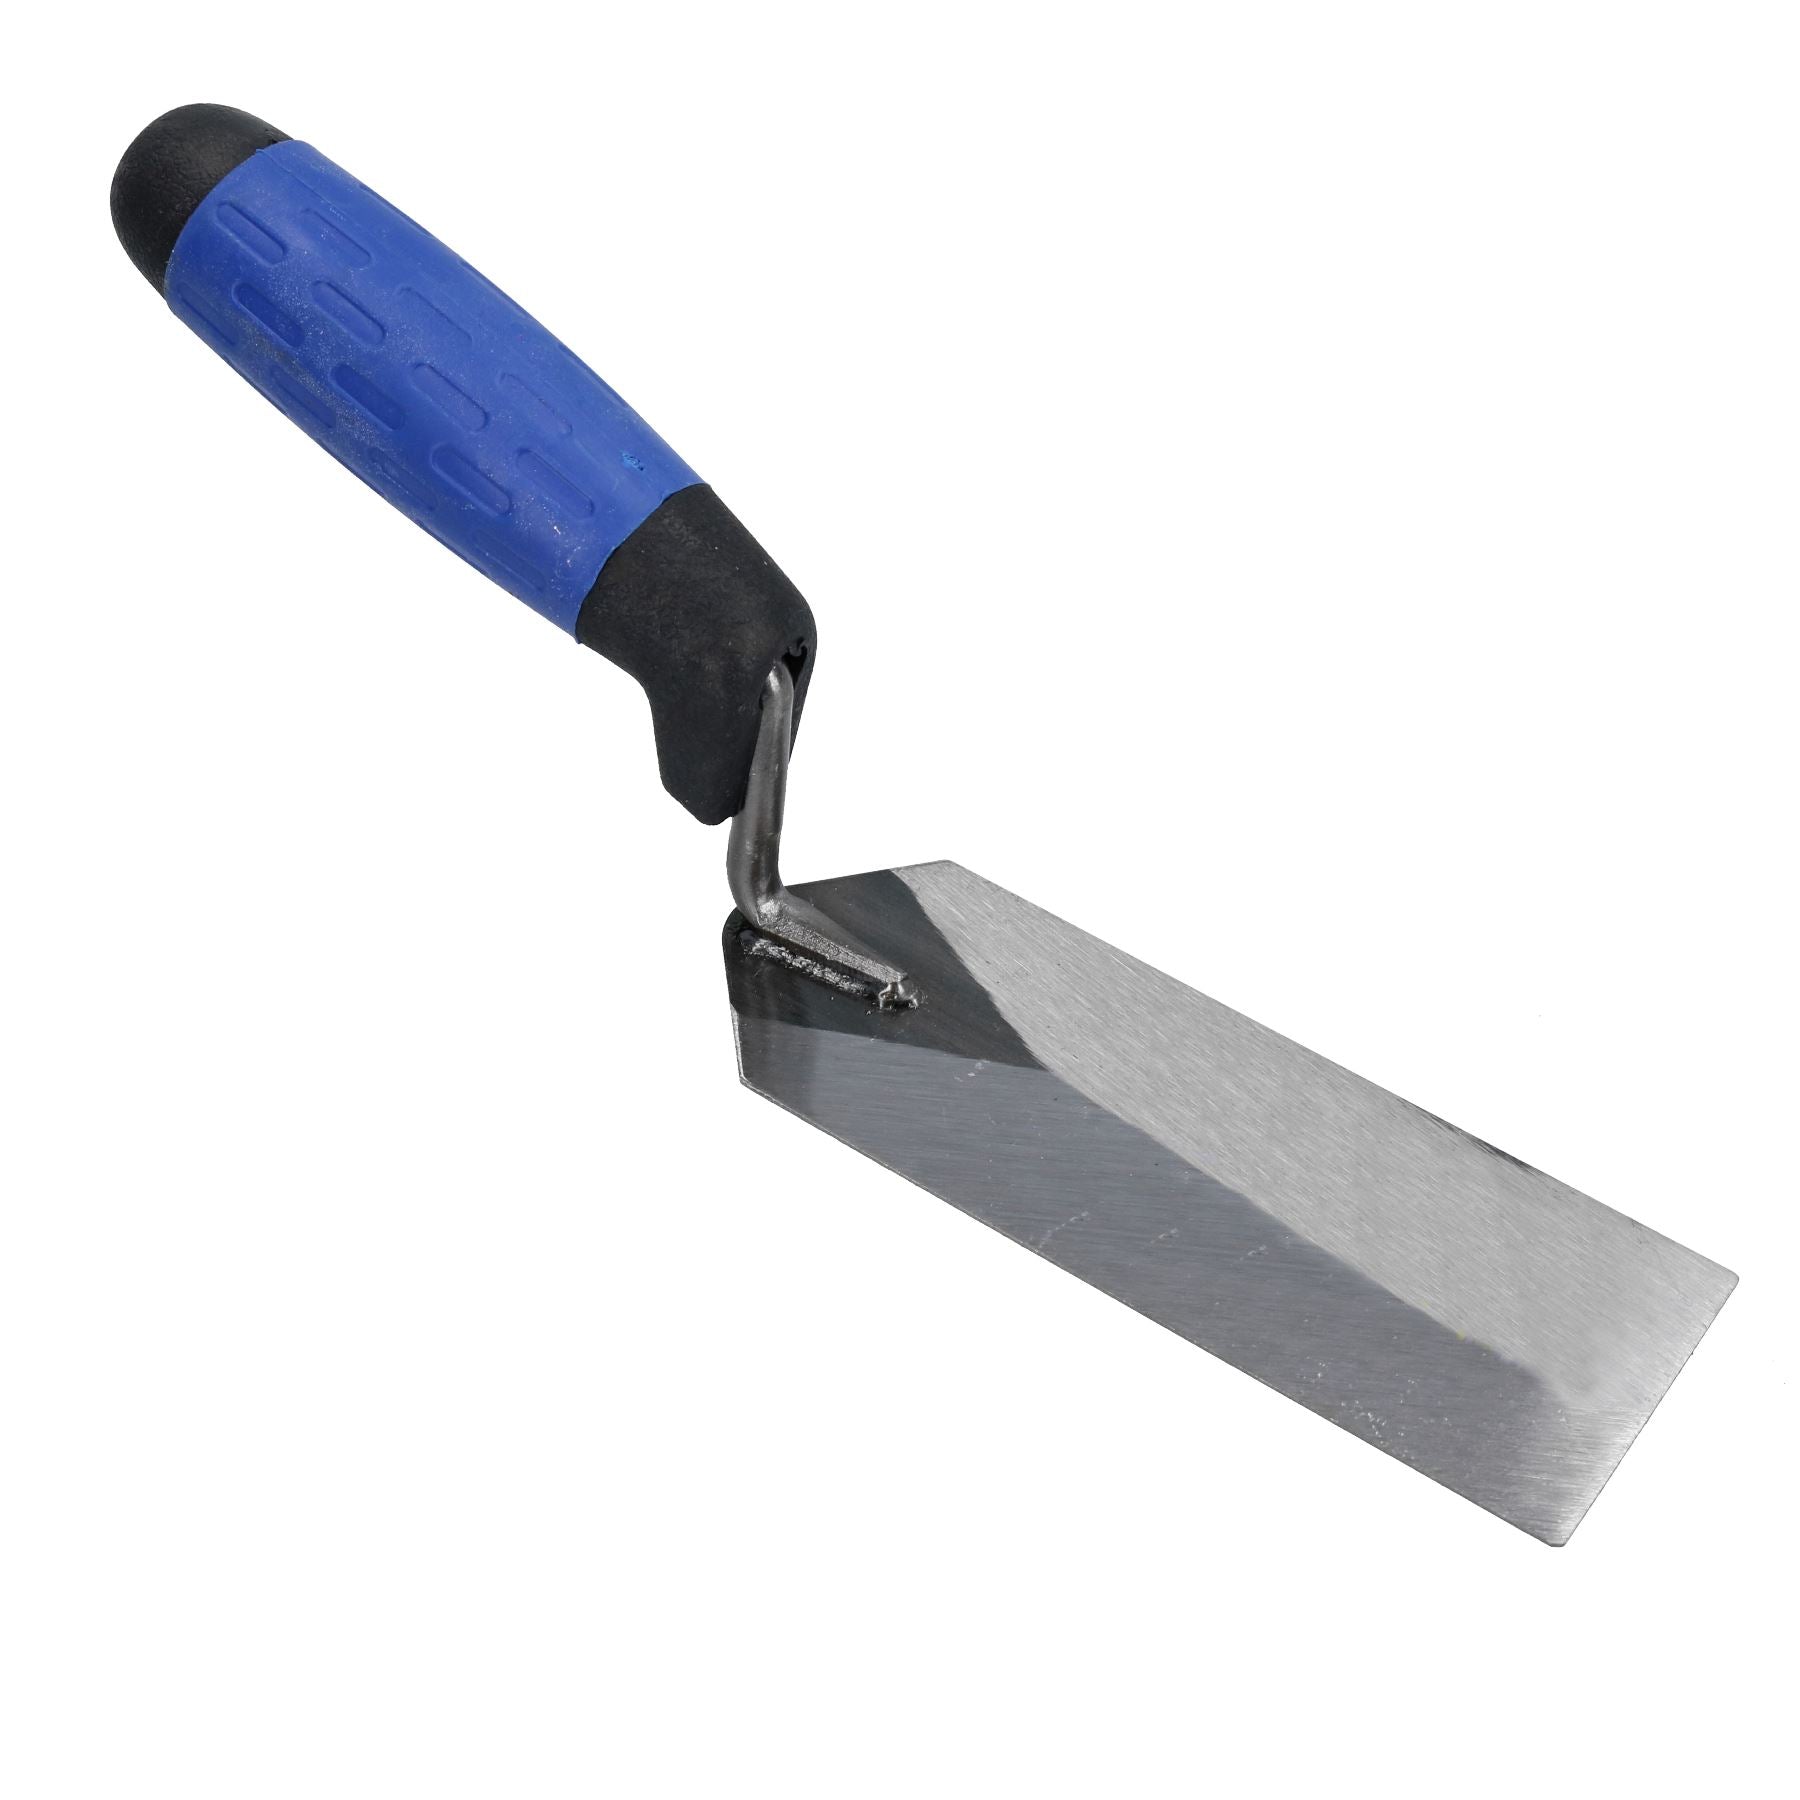 2” x 5” Margin Trowel For Concrete Plastering Building Pointing Edging Soft Grip